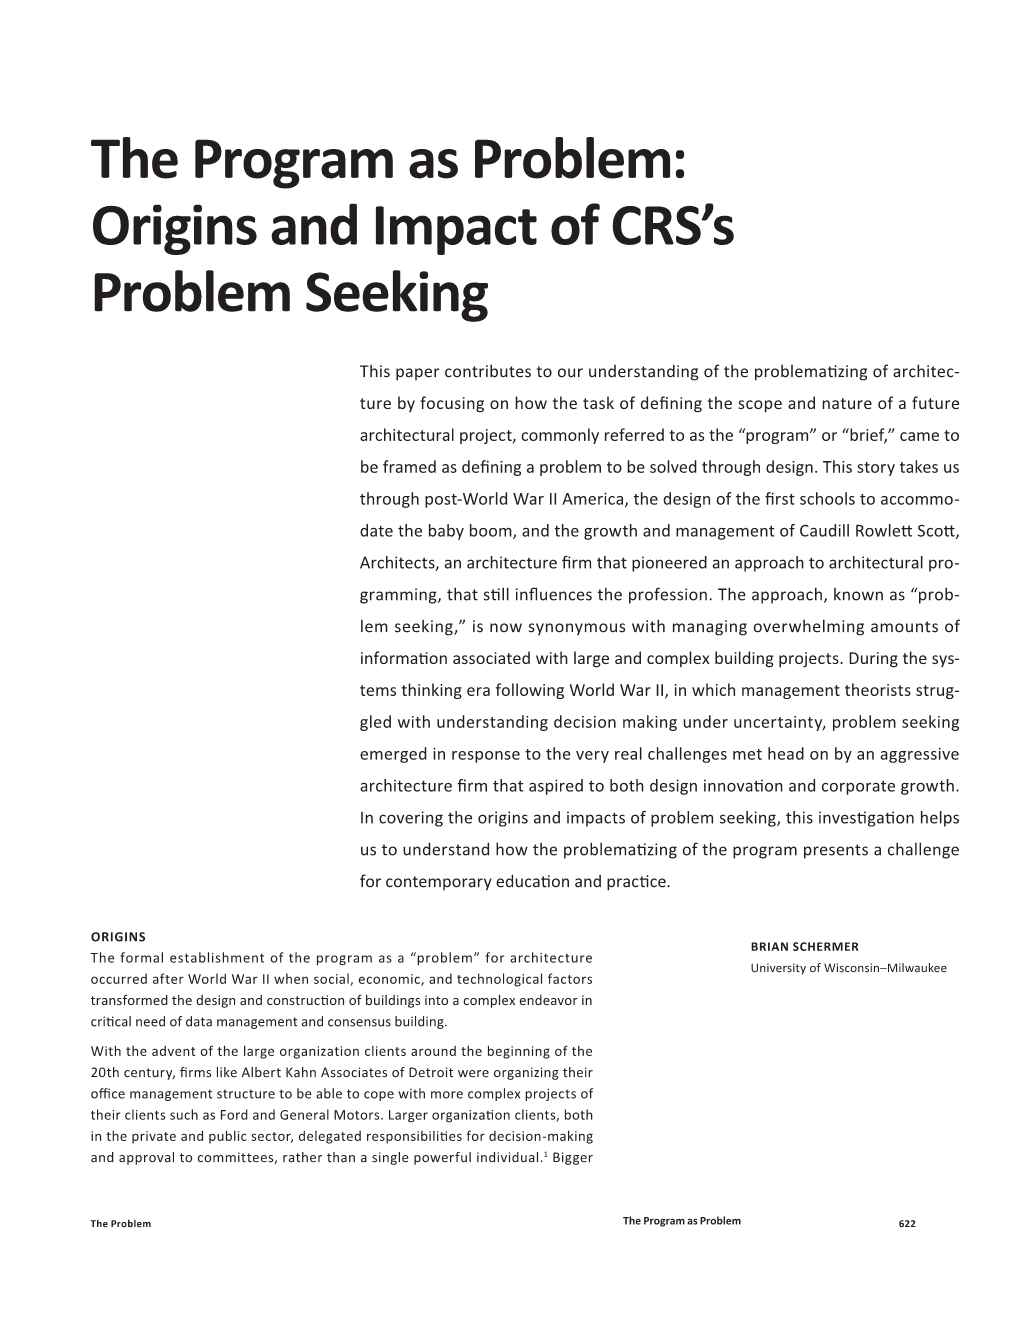 Origins and Impact of CRS's Problem Seeking